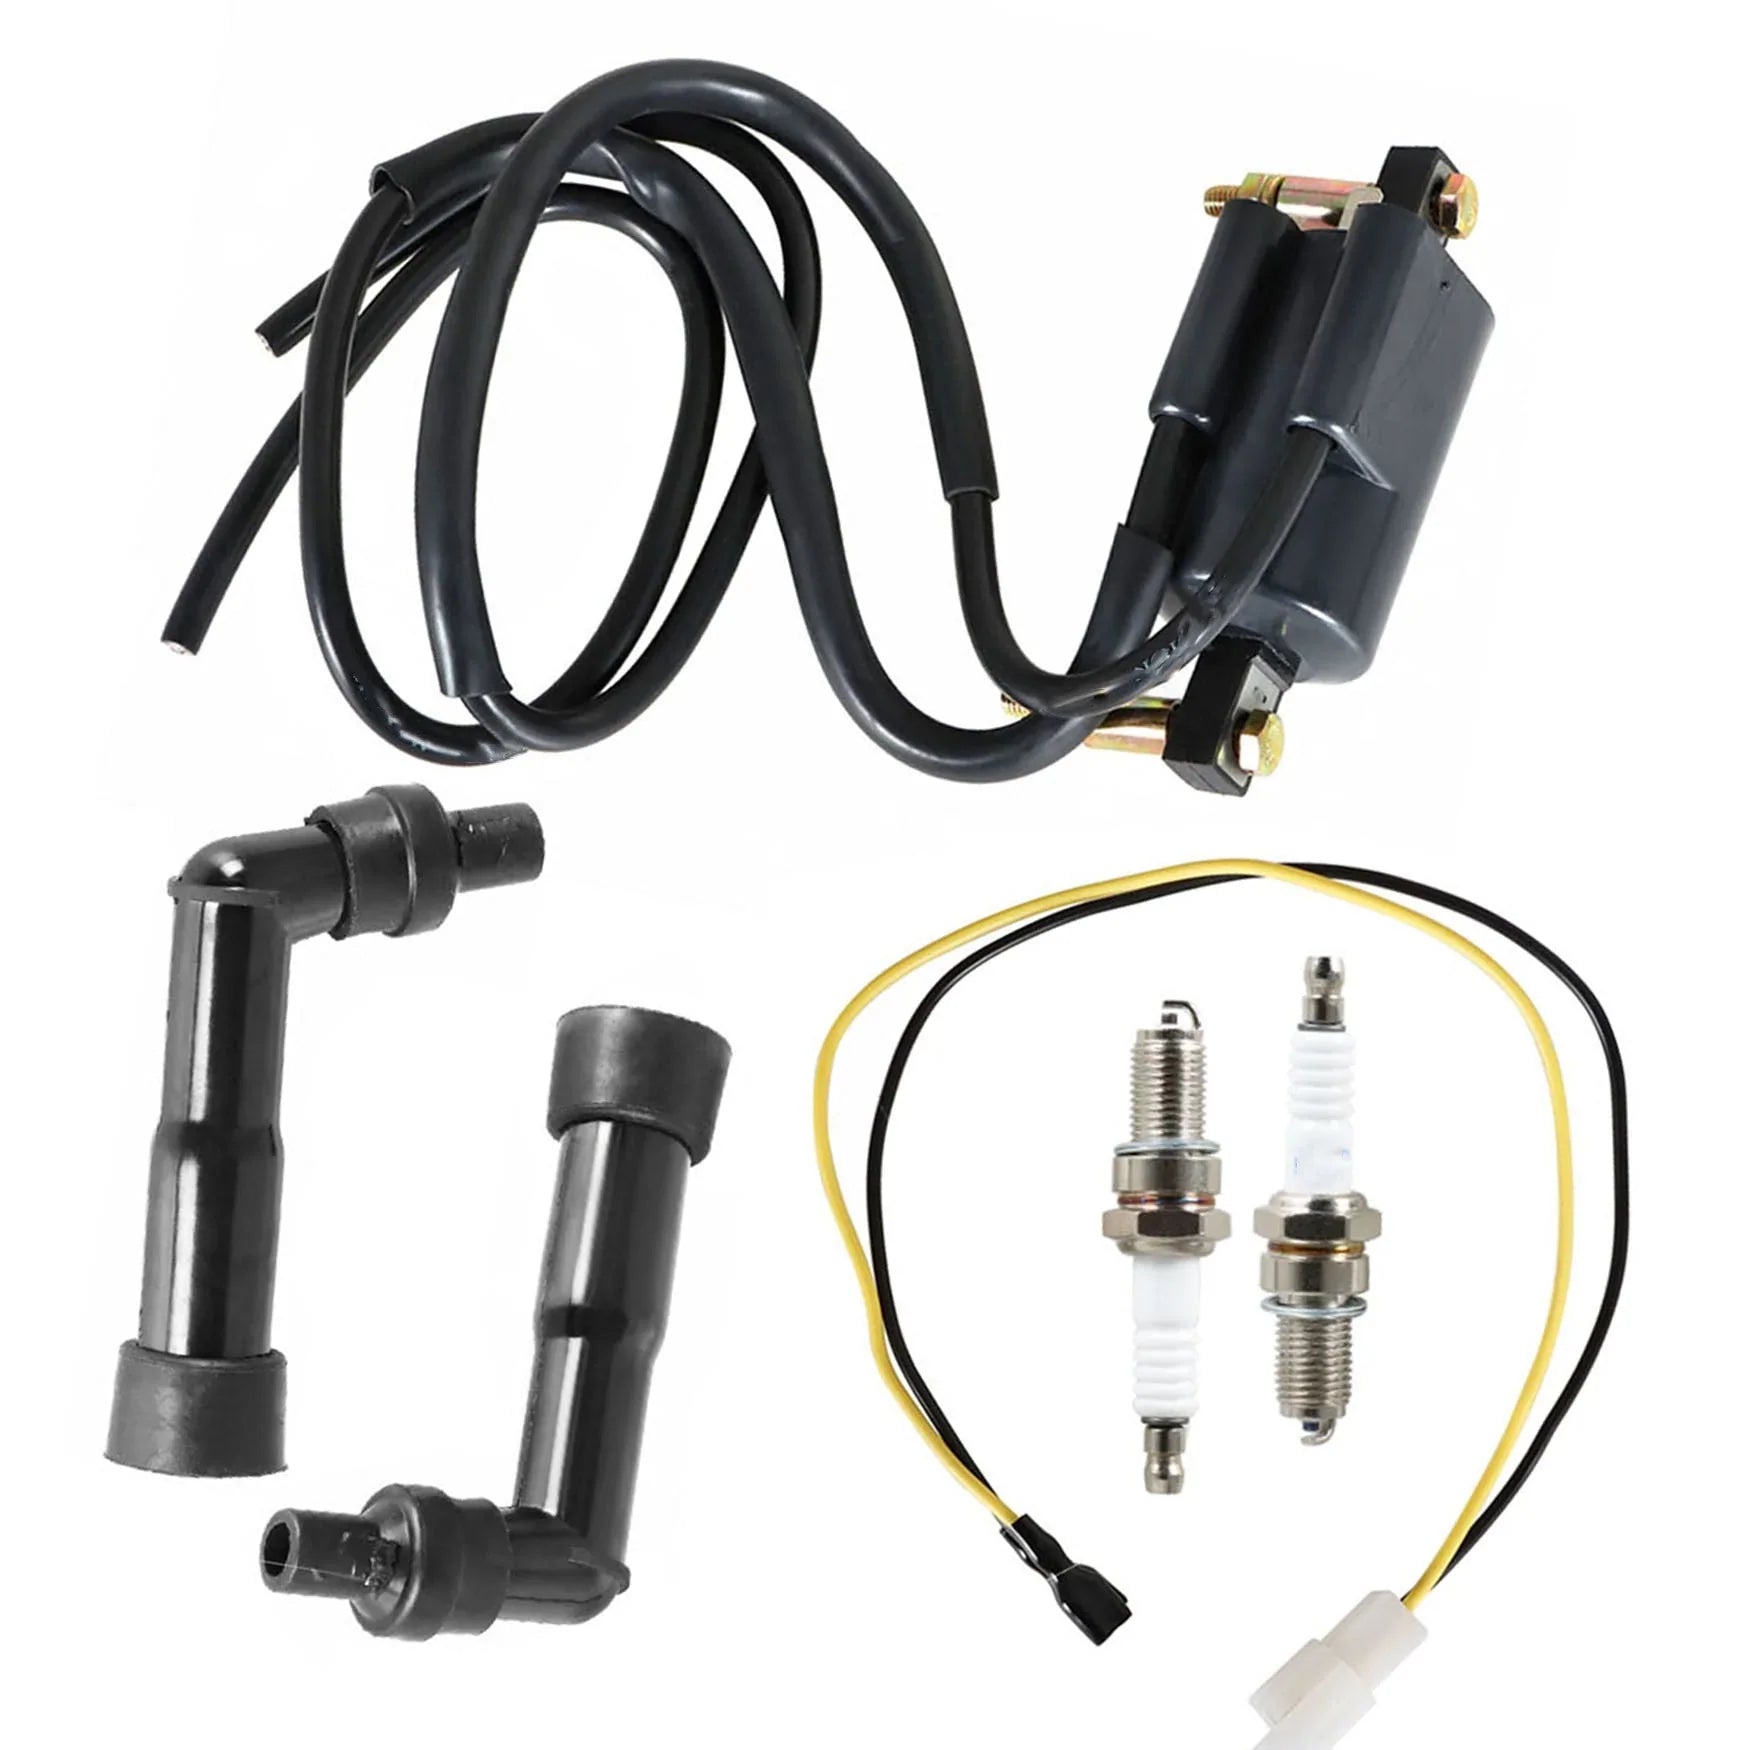 Spark Plug Boot (Angled) | Honda CB450 / CL450 / CB500T